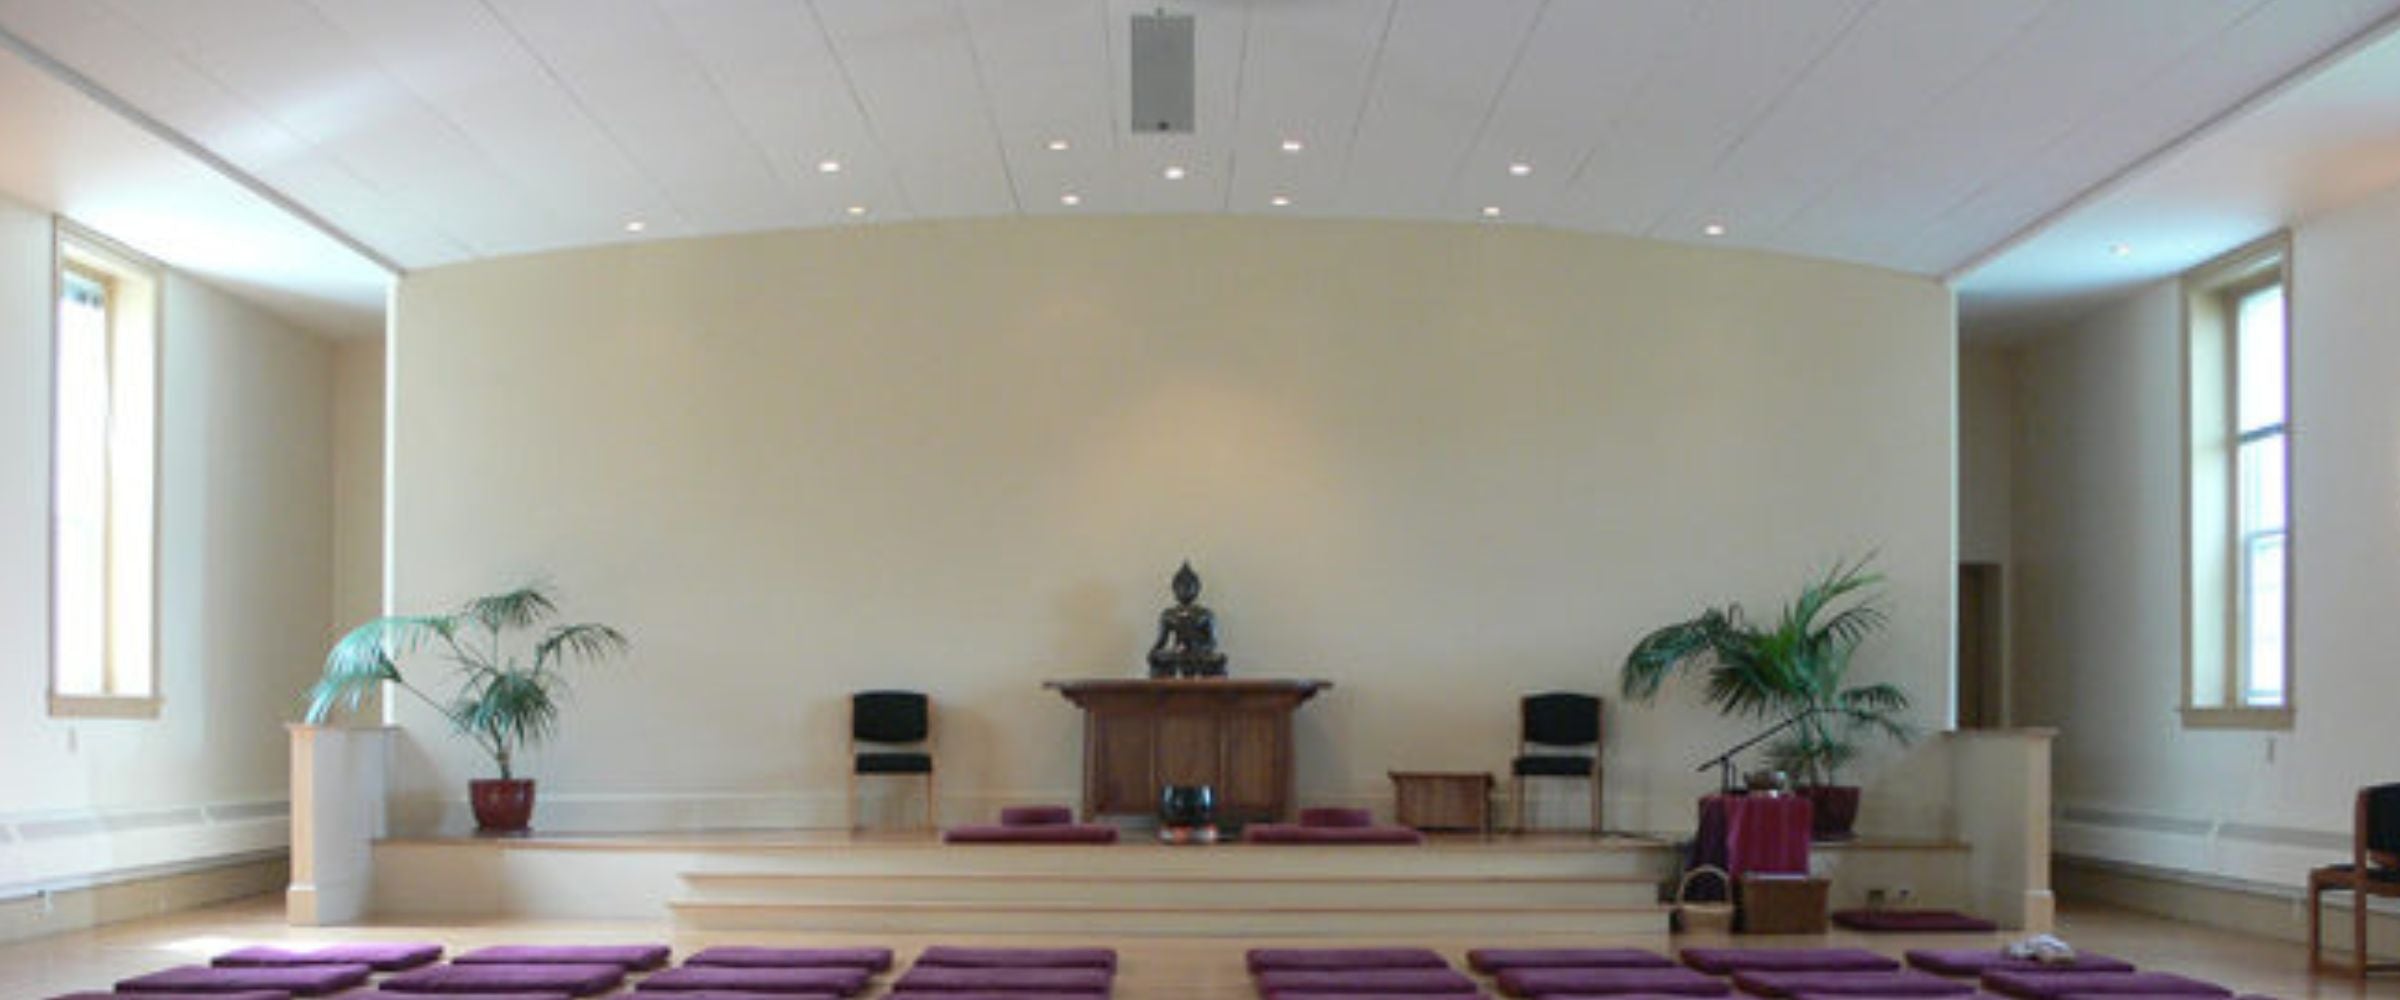 Air Conditioning System In Meditation Center